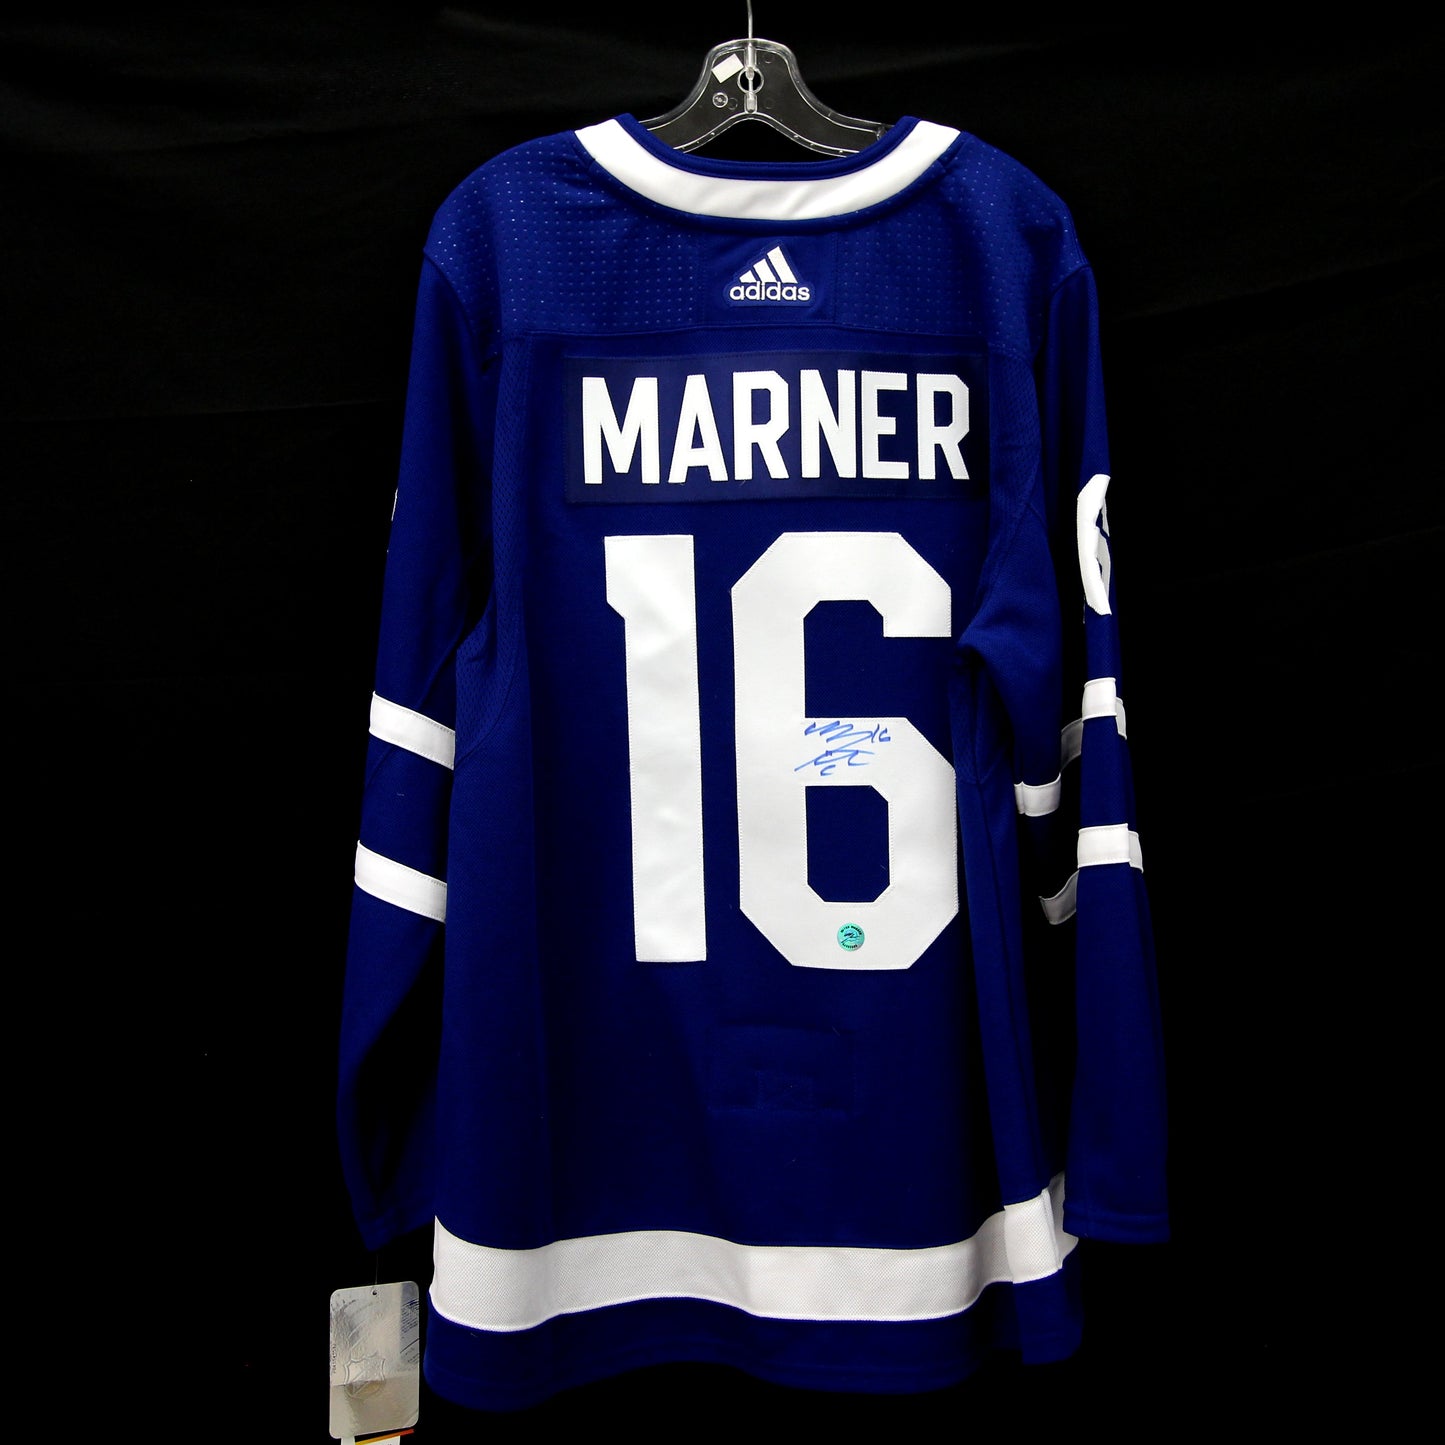 Mitch Marner - Maple Leafs - Autographed Jersey / Chandail autographié